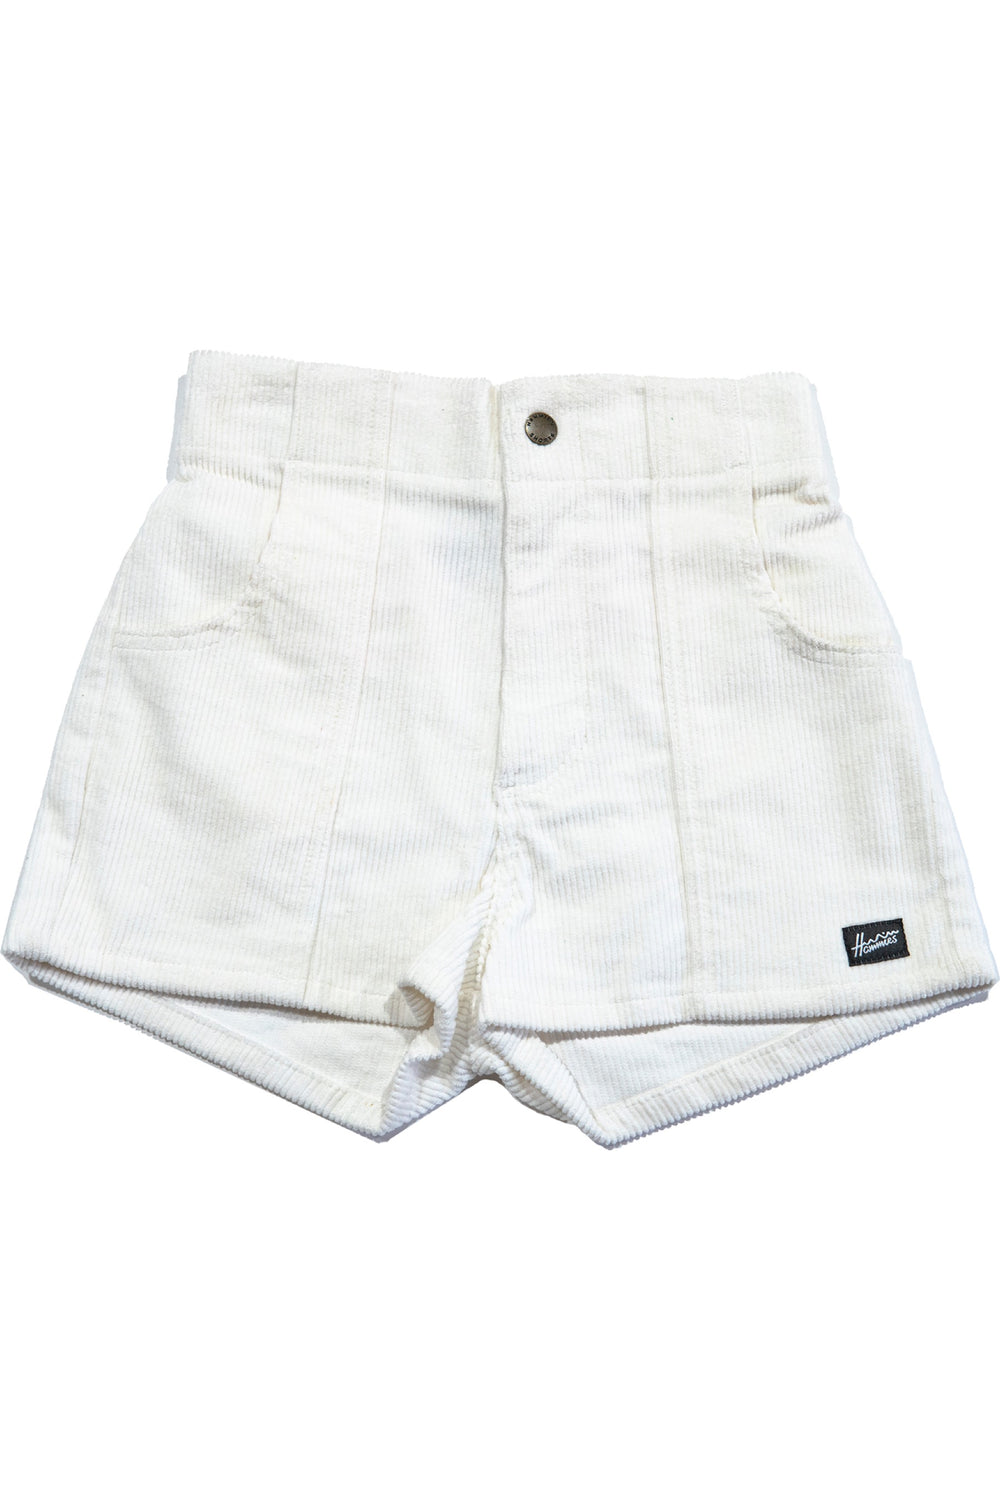 White Hammies Shorts